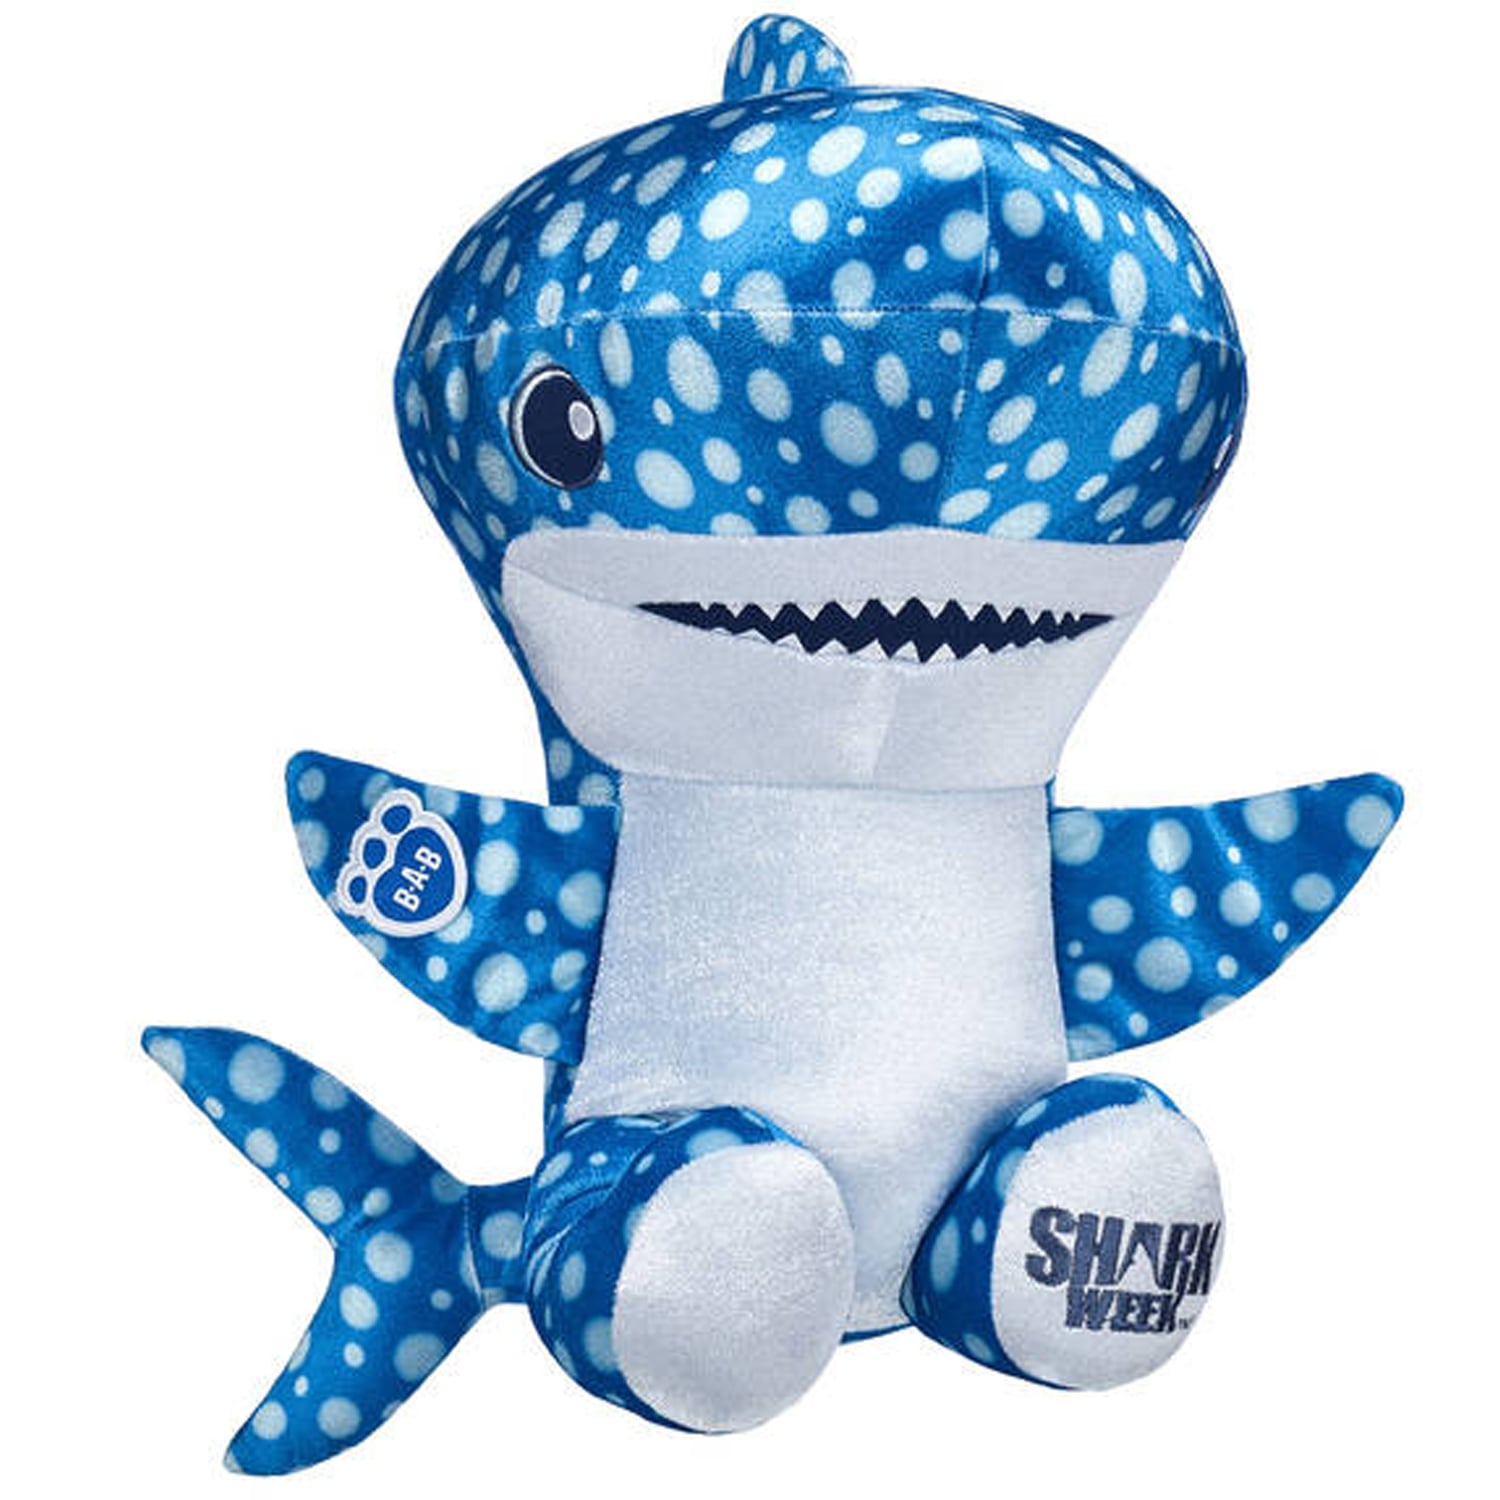 shark week 2019 toys